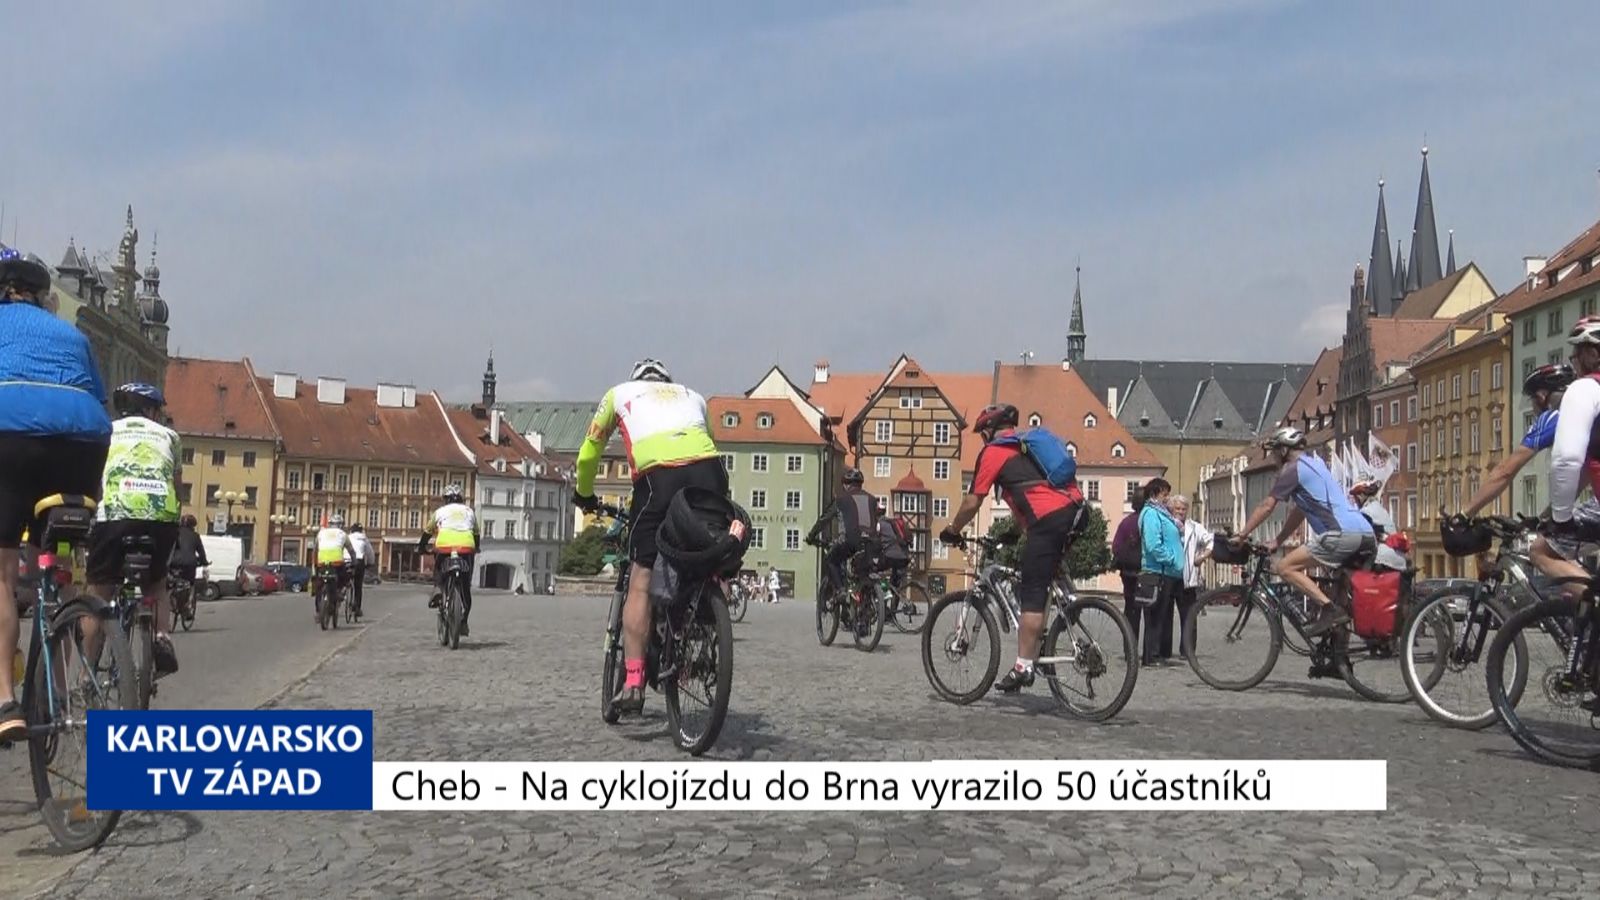 Cheb: Na cyklojízdu do Brna vyrazilo 50 účastníků (TV Západ)